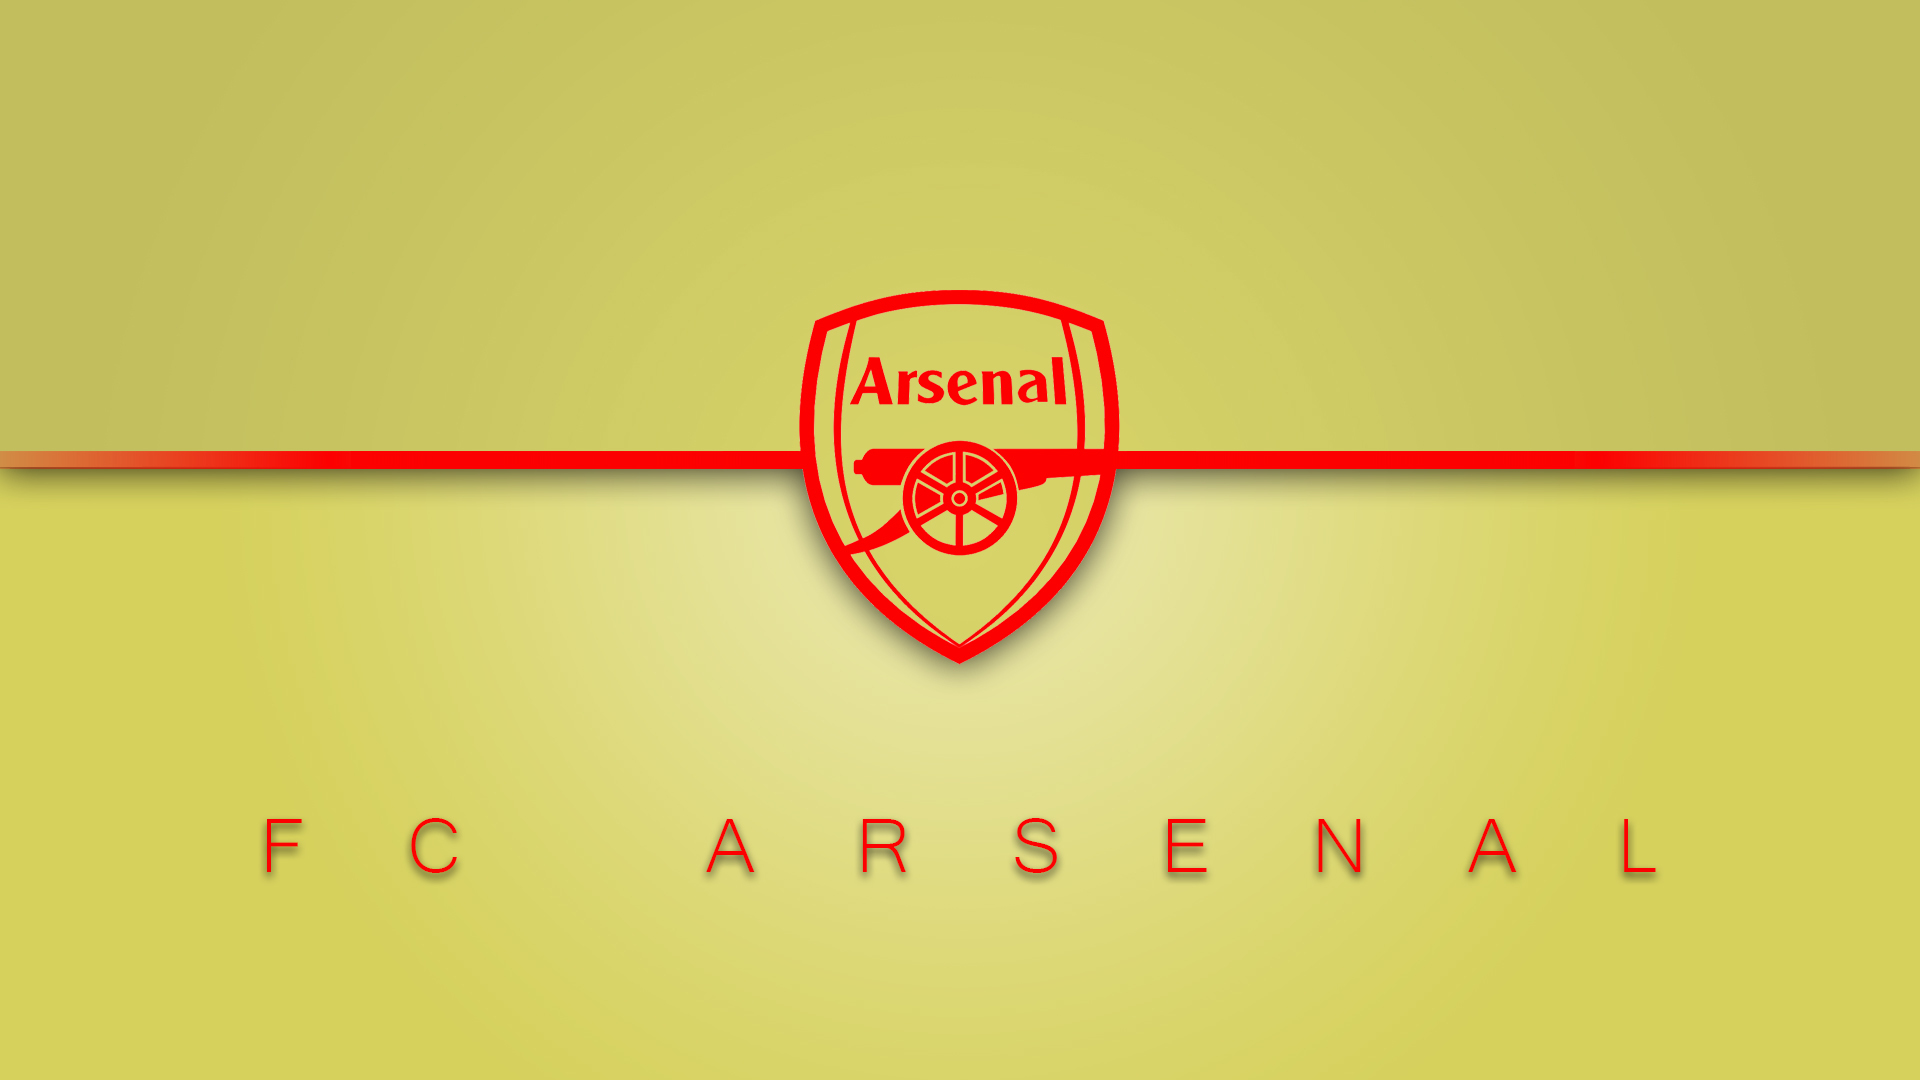 Download Stunning Arsenal Logos in Full HD PNG, JPG Formats